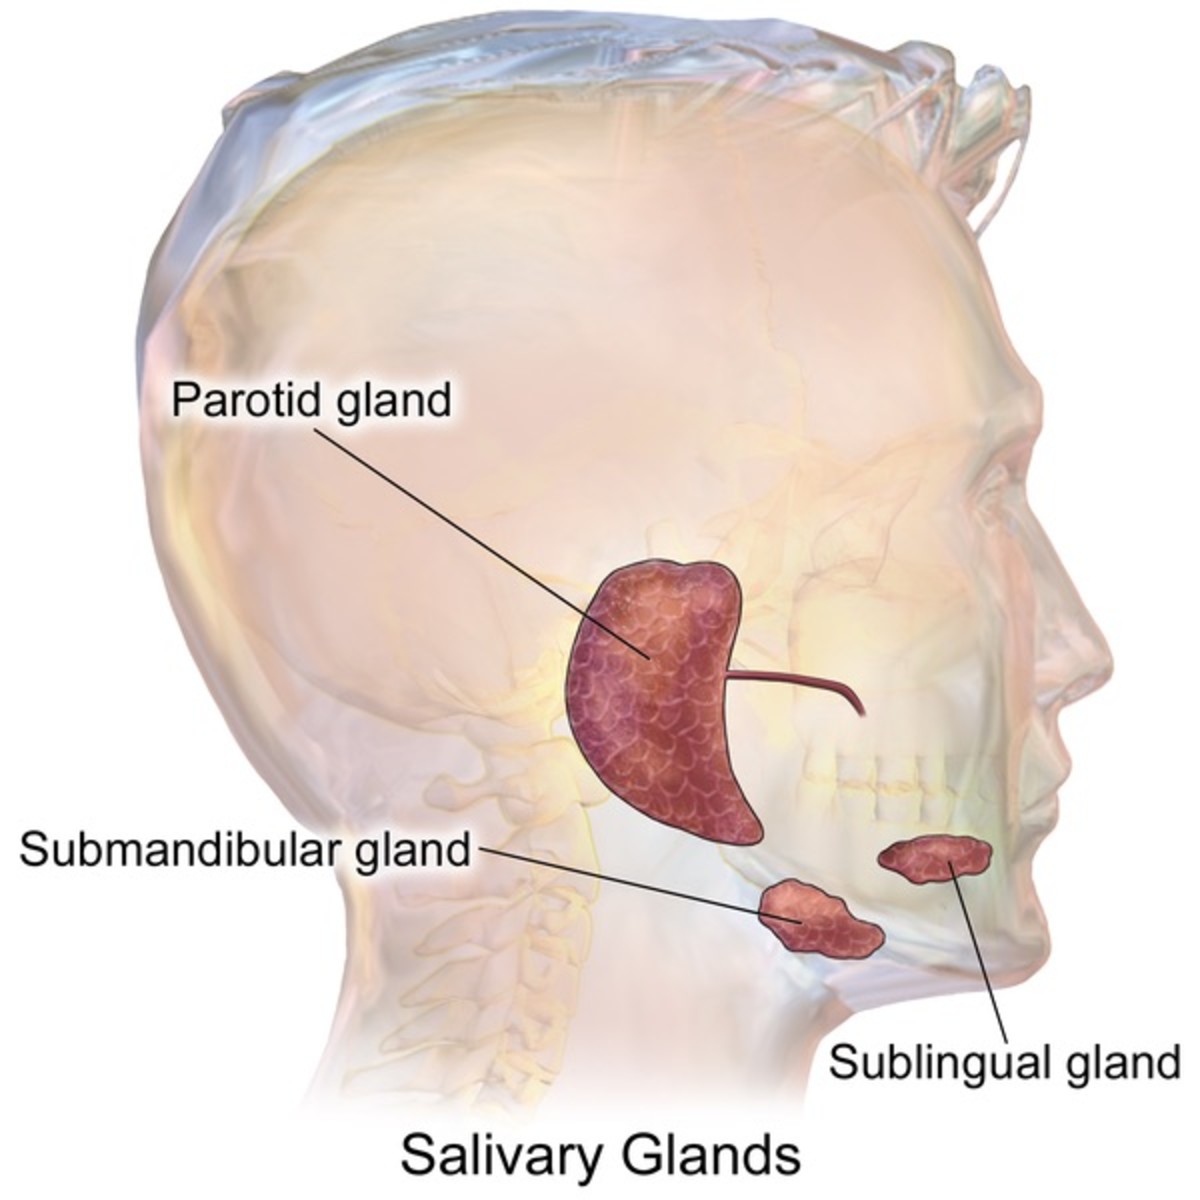 The major salivary glands